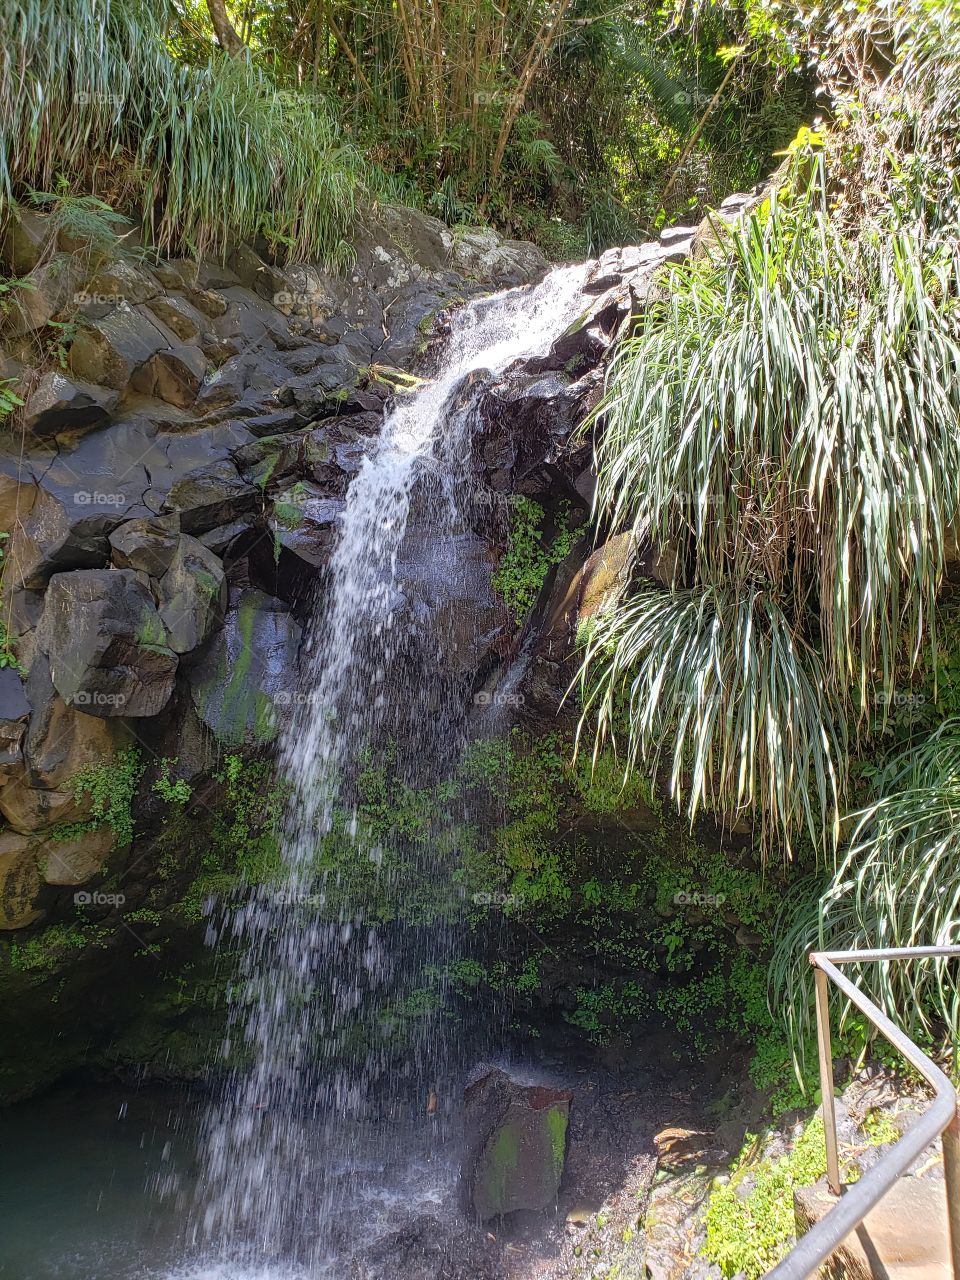 Annandale Falls in Grenada